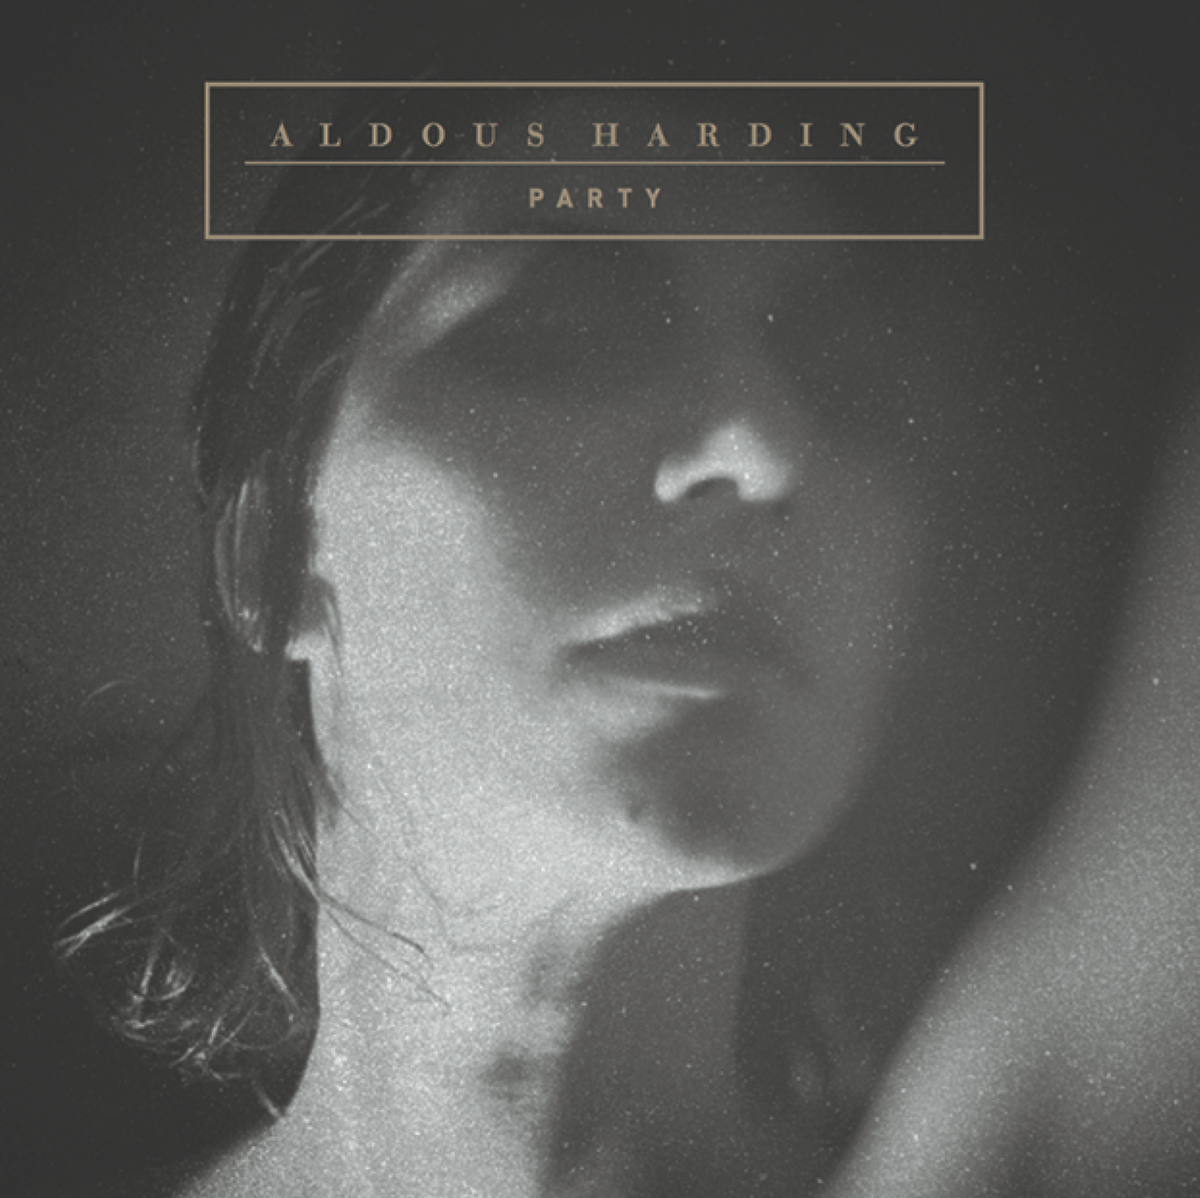 Aldous Harding  „Party“ 
Label: 4AD
9 Songs / 38:44 Min.
13,99 Euro
www.aldousharding.com